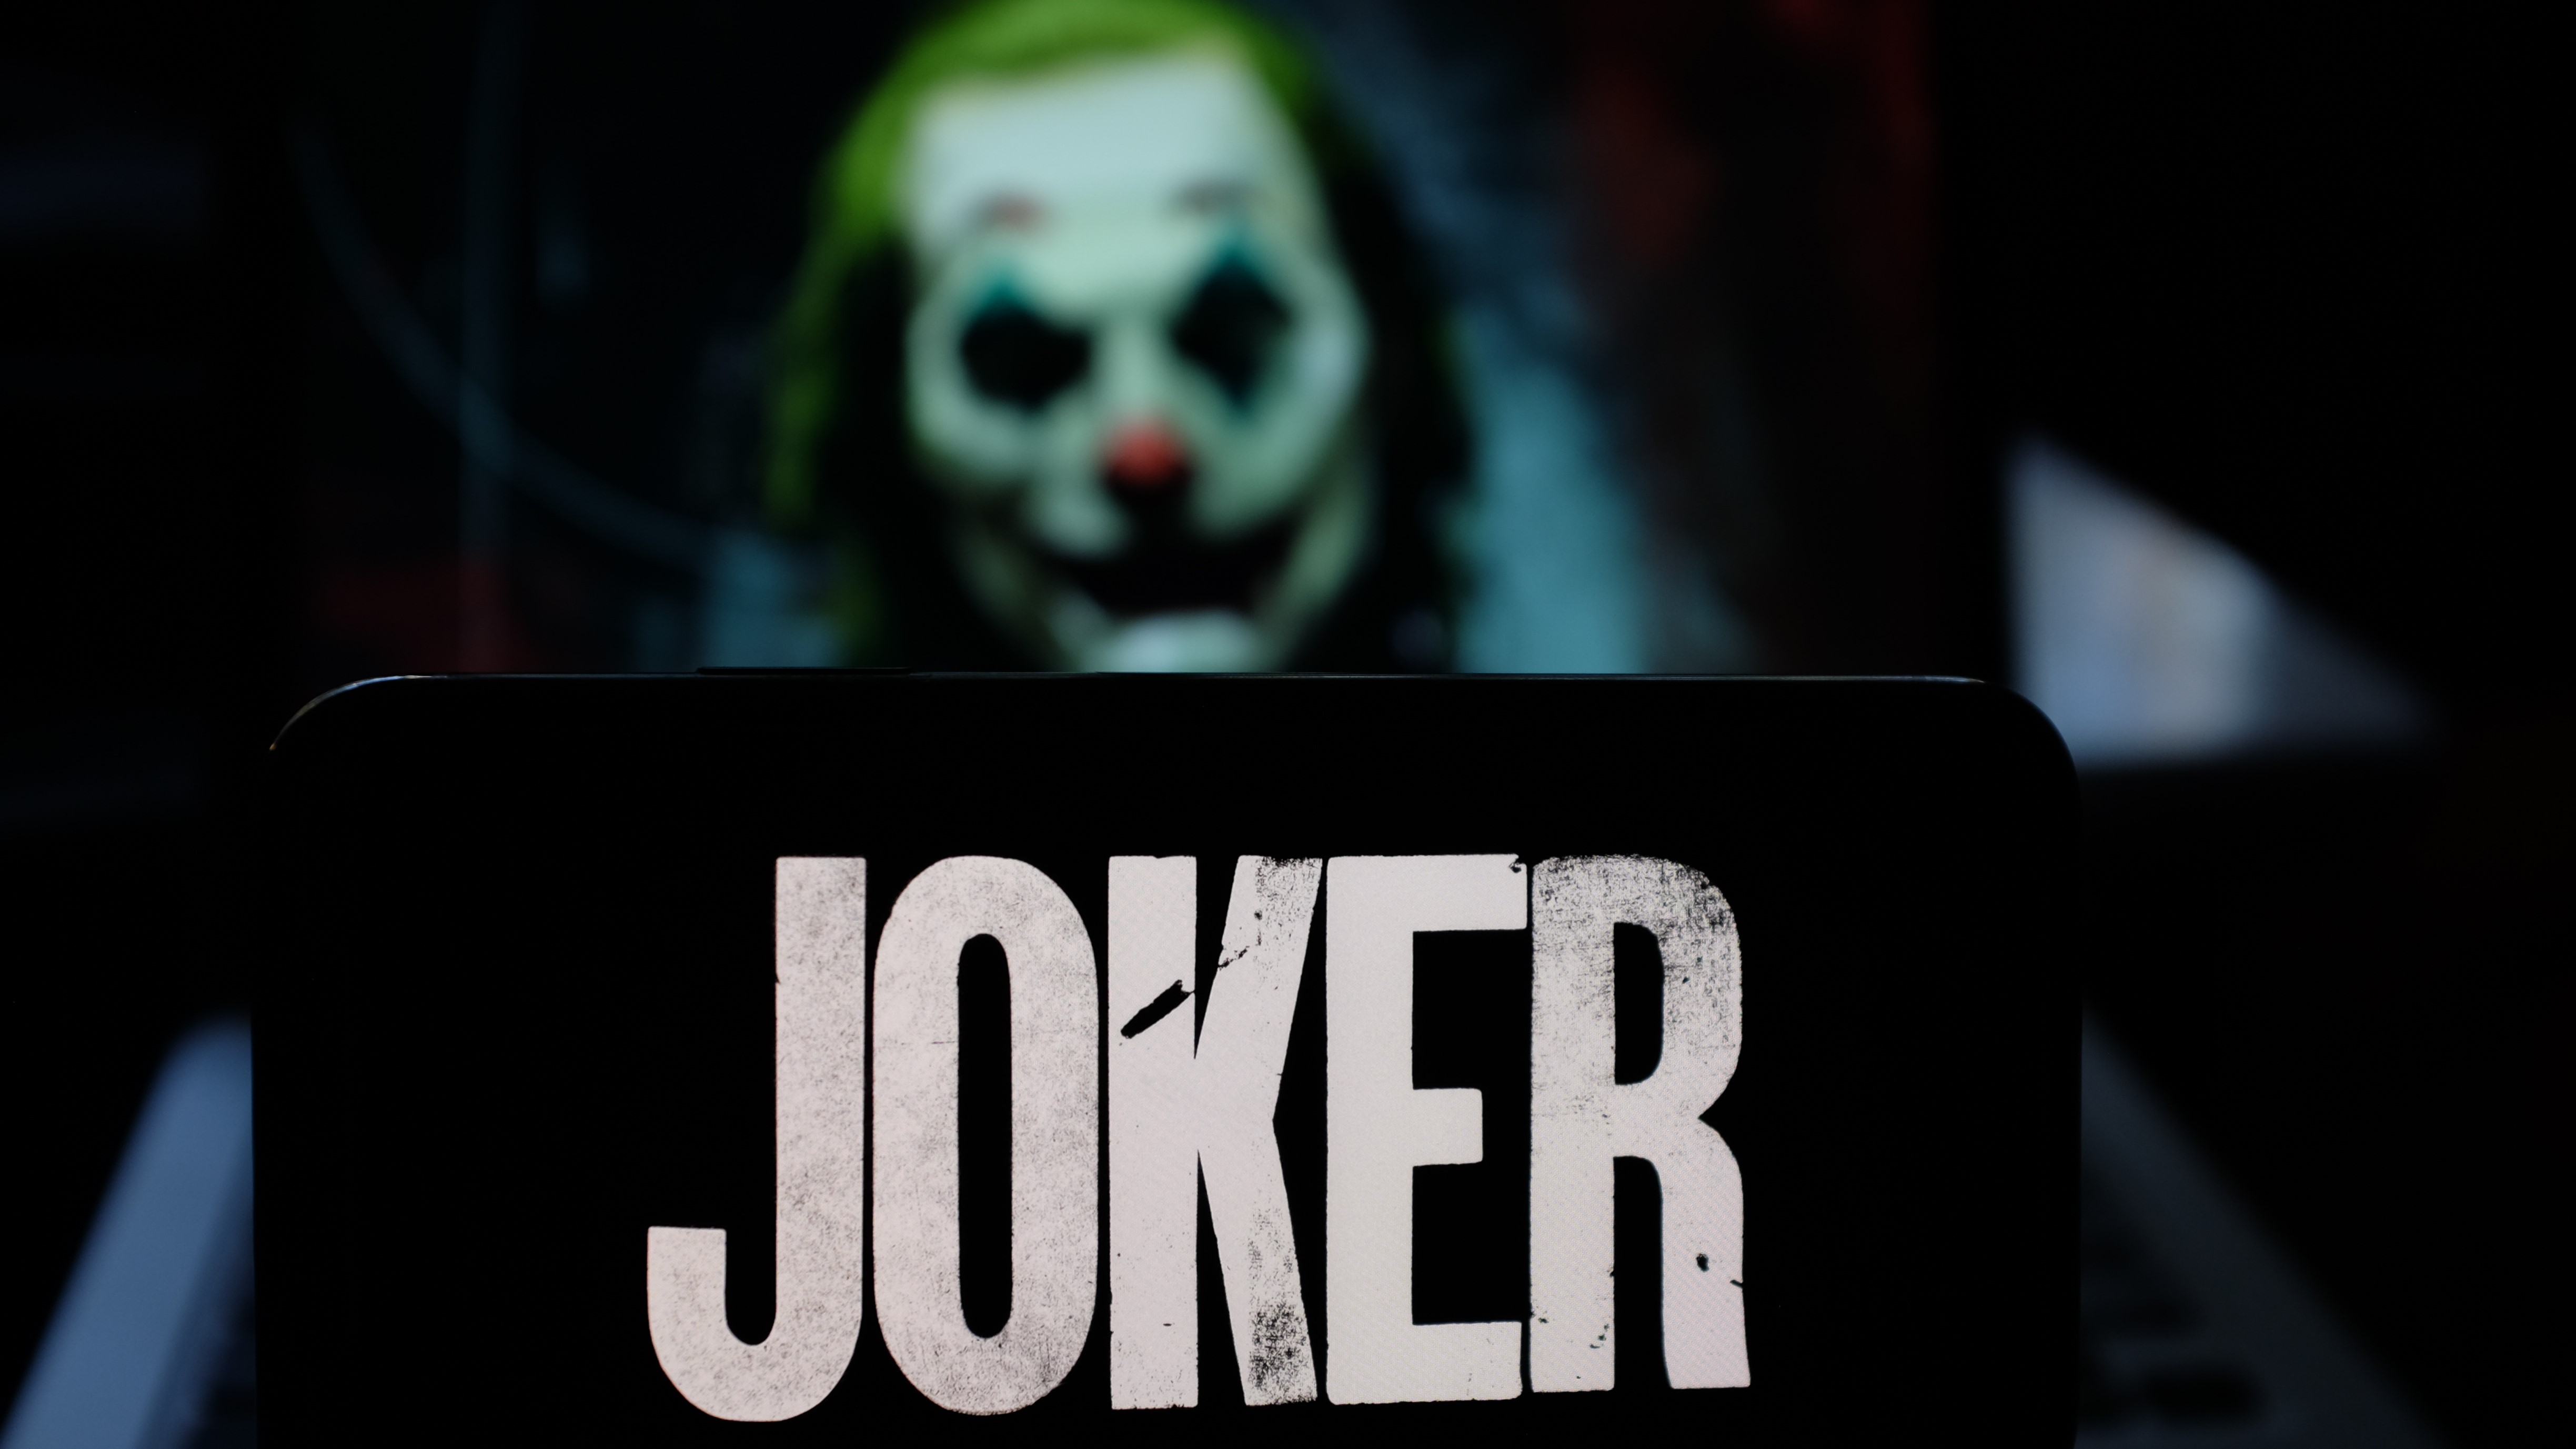 A picture of Joker depicting the Joker malware